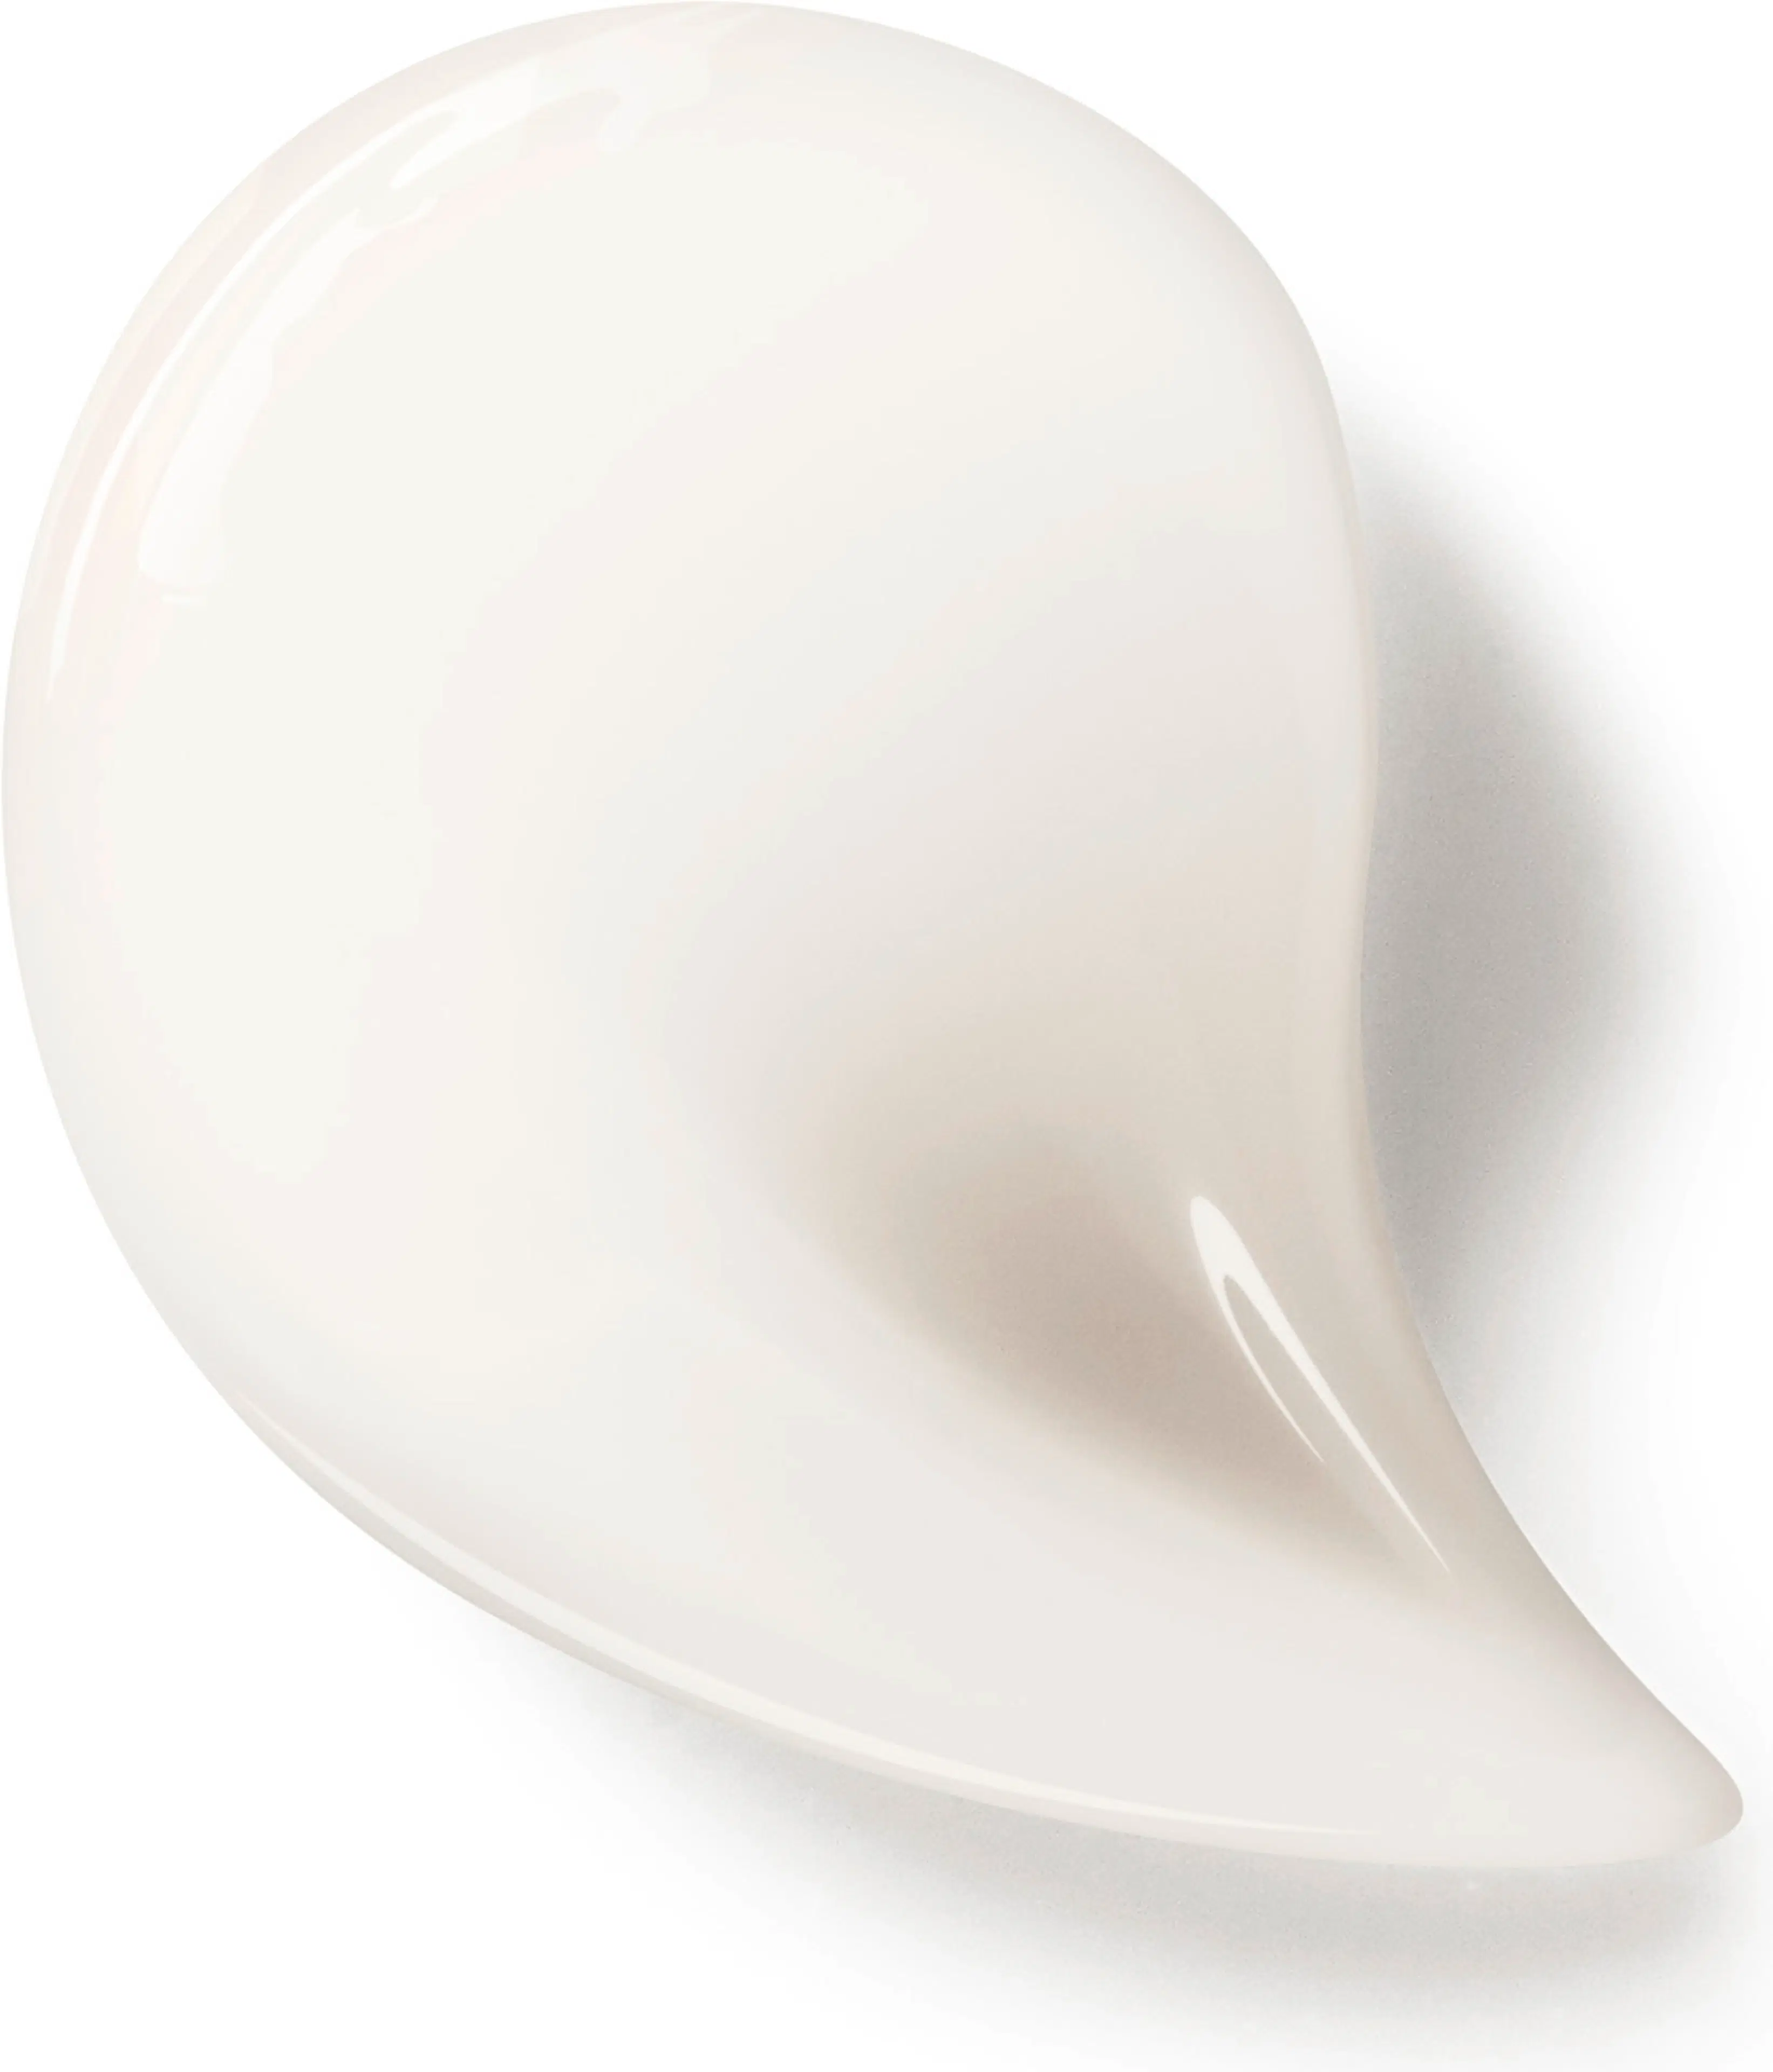 DIOR Prestige Le concentré Yeux Eye cream Refill silmänympärysvoide täyttöpakkaus 15 ml